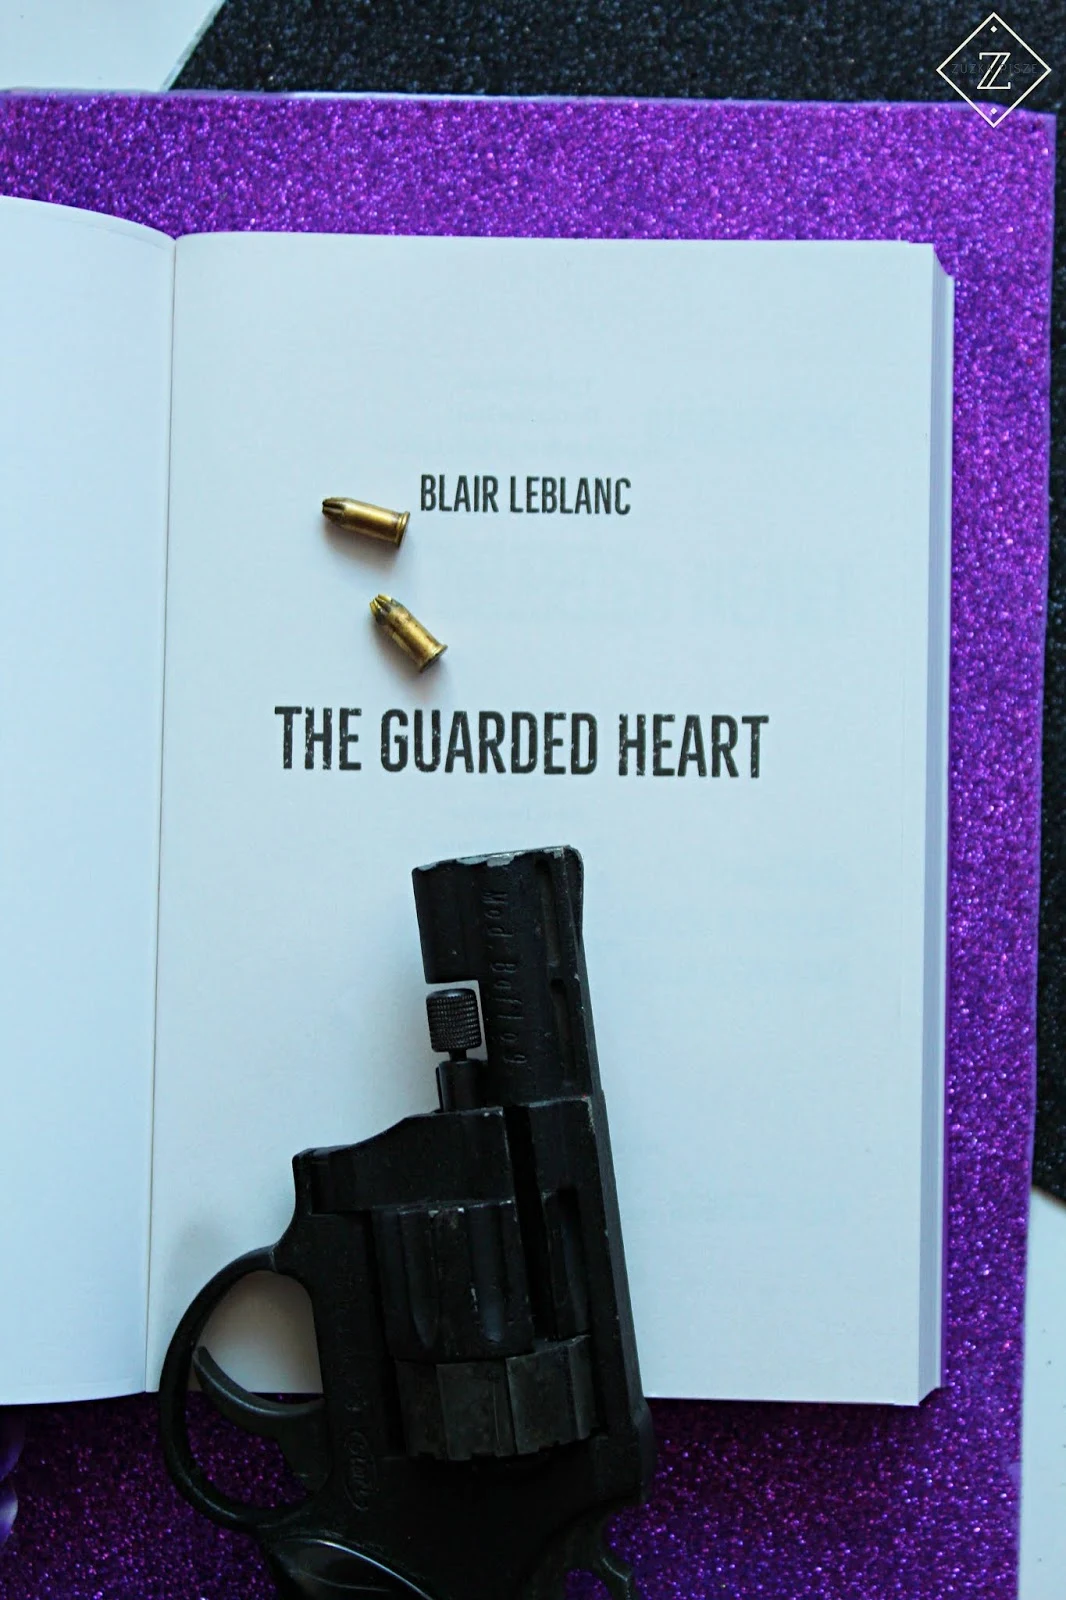 Blair LeBlanc "The Guarded Heart" - recenzja patronacka